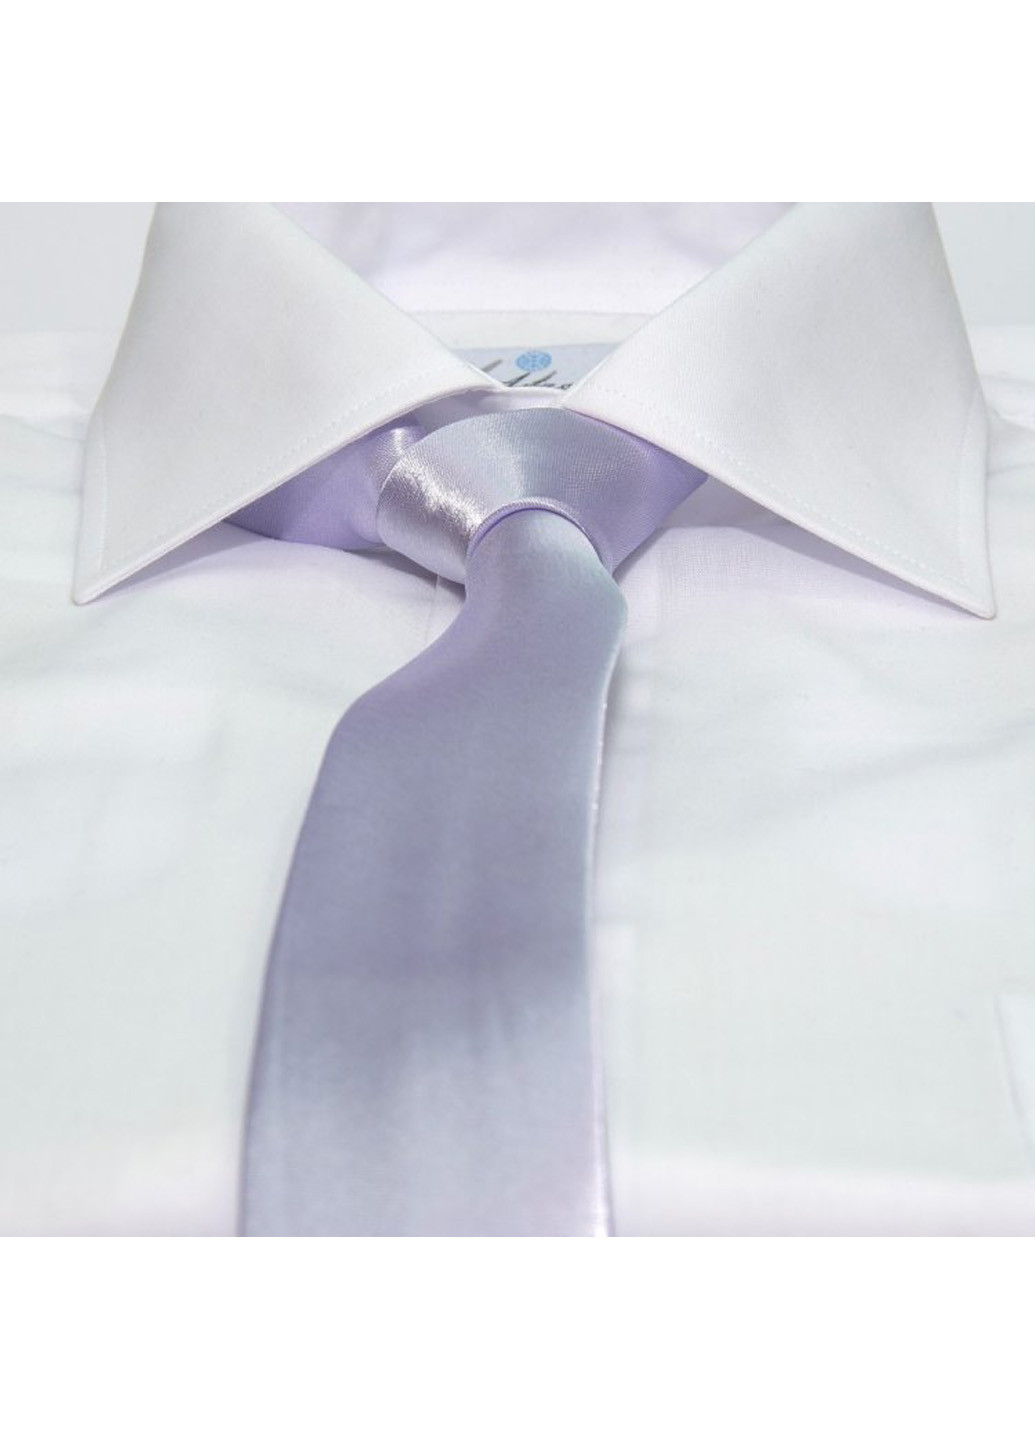 Мужской галстук 5 см Handmade (191127496)